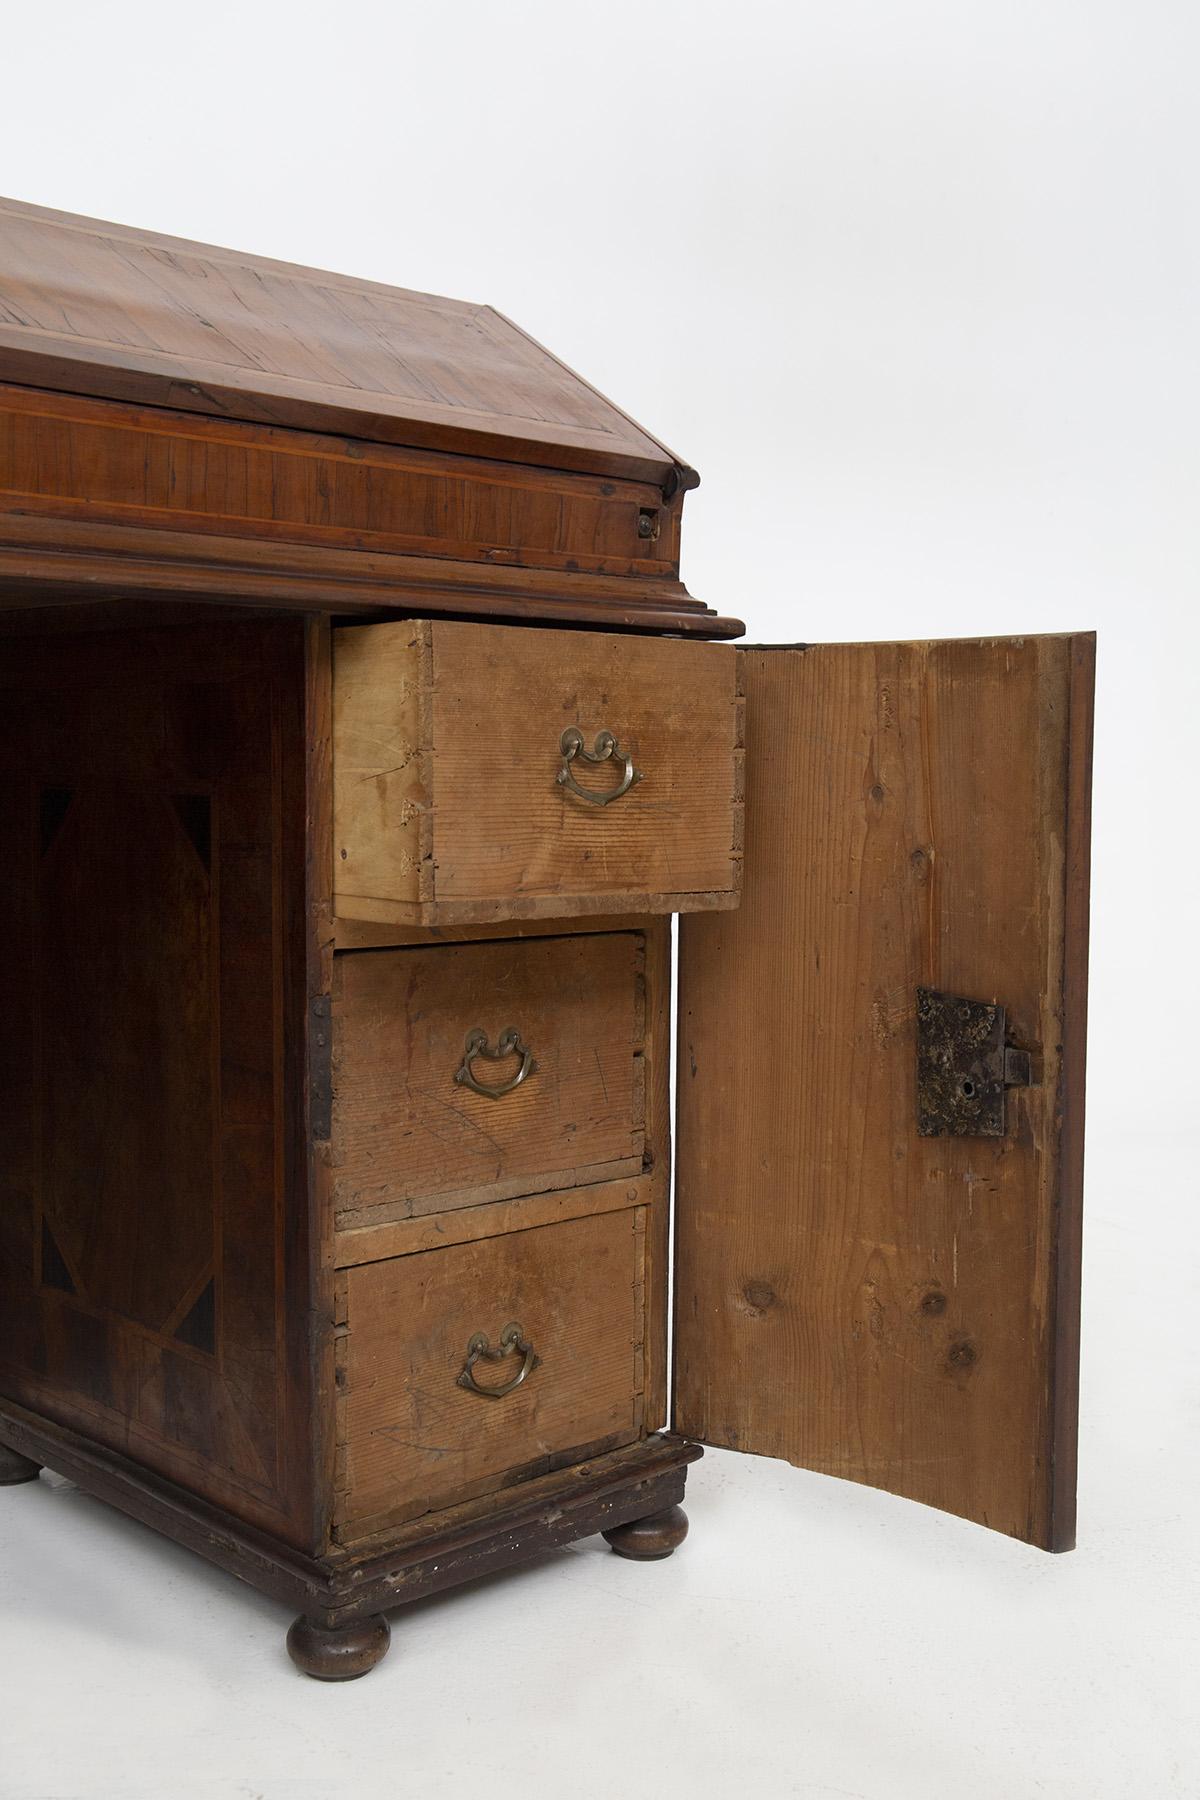 French Provincial Antique Elegant Wooden Bureau For Sale